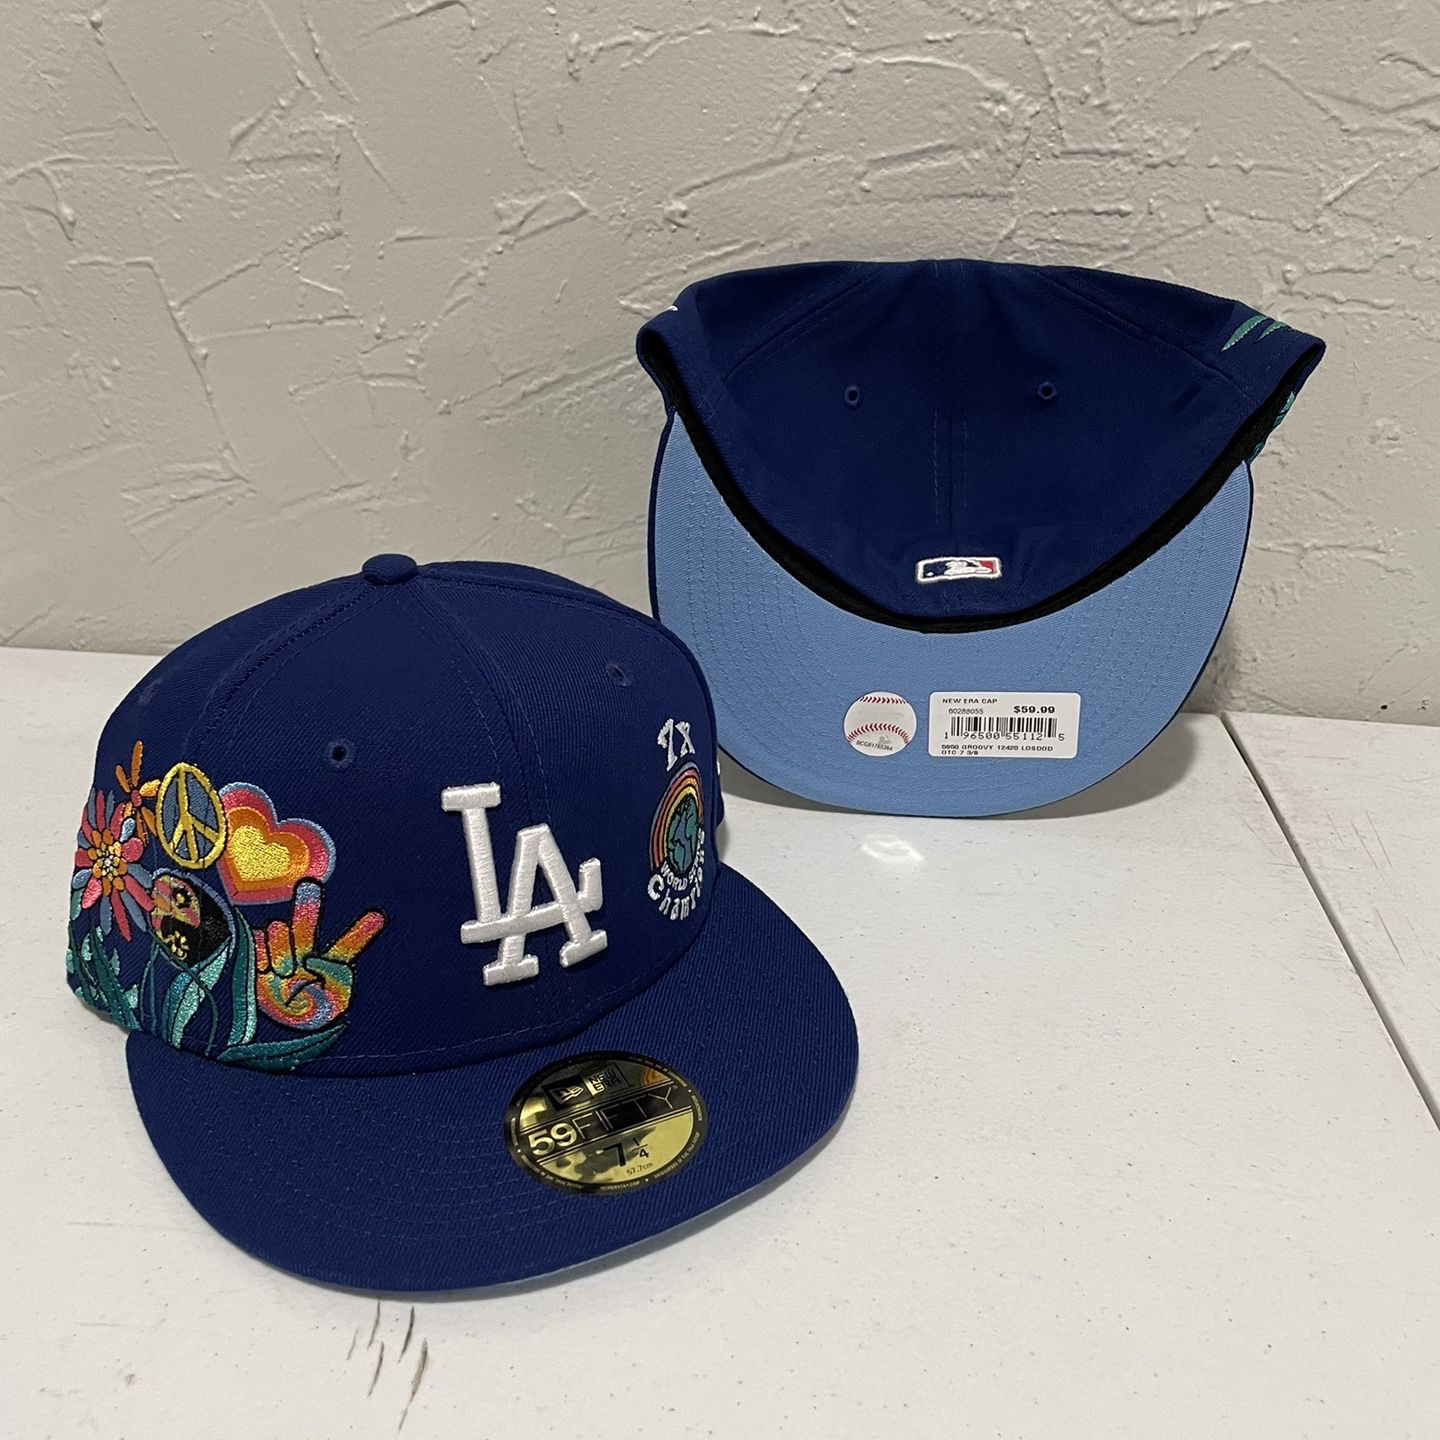 2 LA Hats & 1 Rams Super Bowl LVI Hat for Sale in Torrance, CA - OfferUp